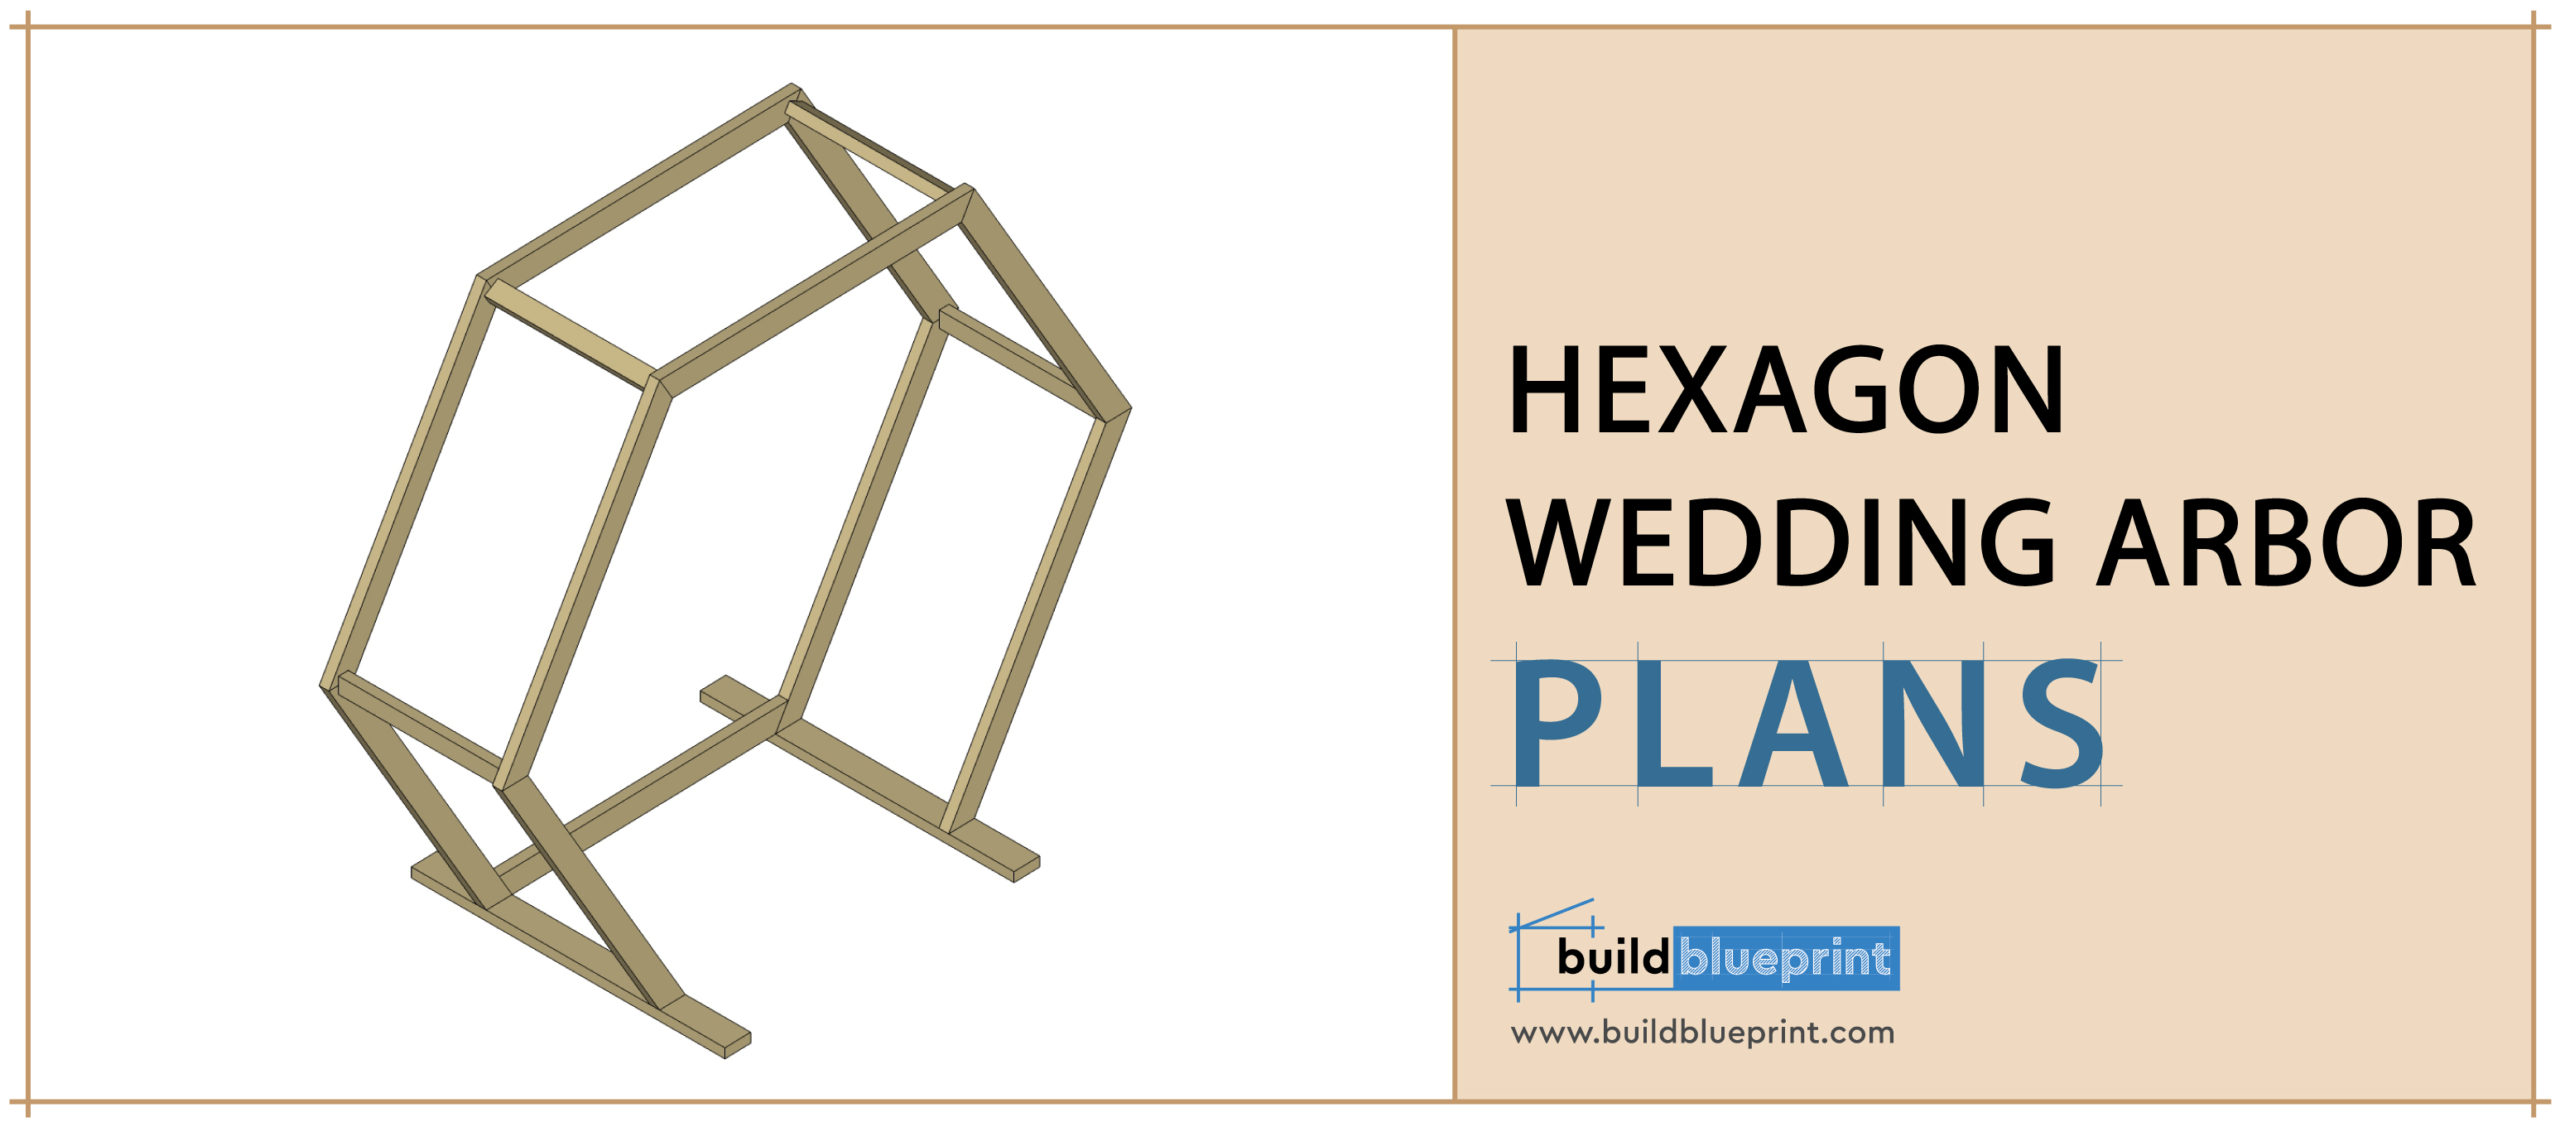 Hexagon Wedding Arbor Diy Plans Build Blueprint